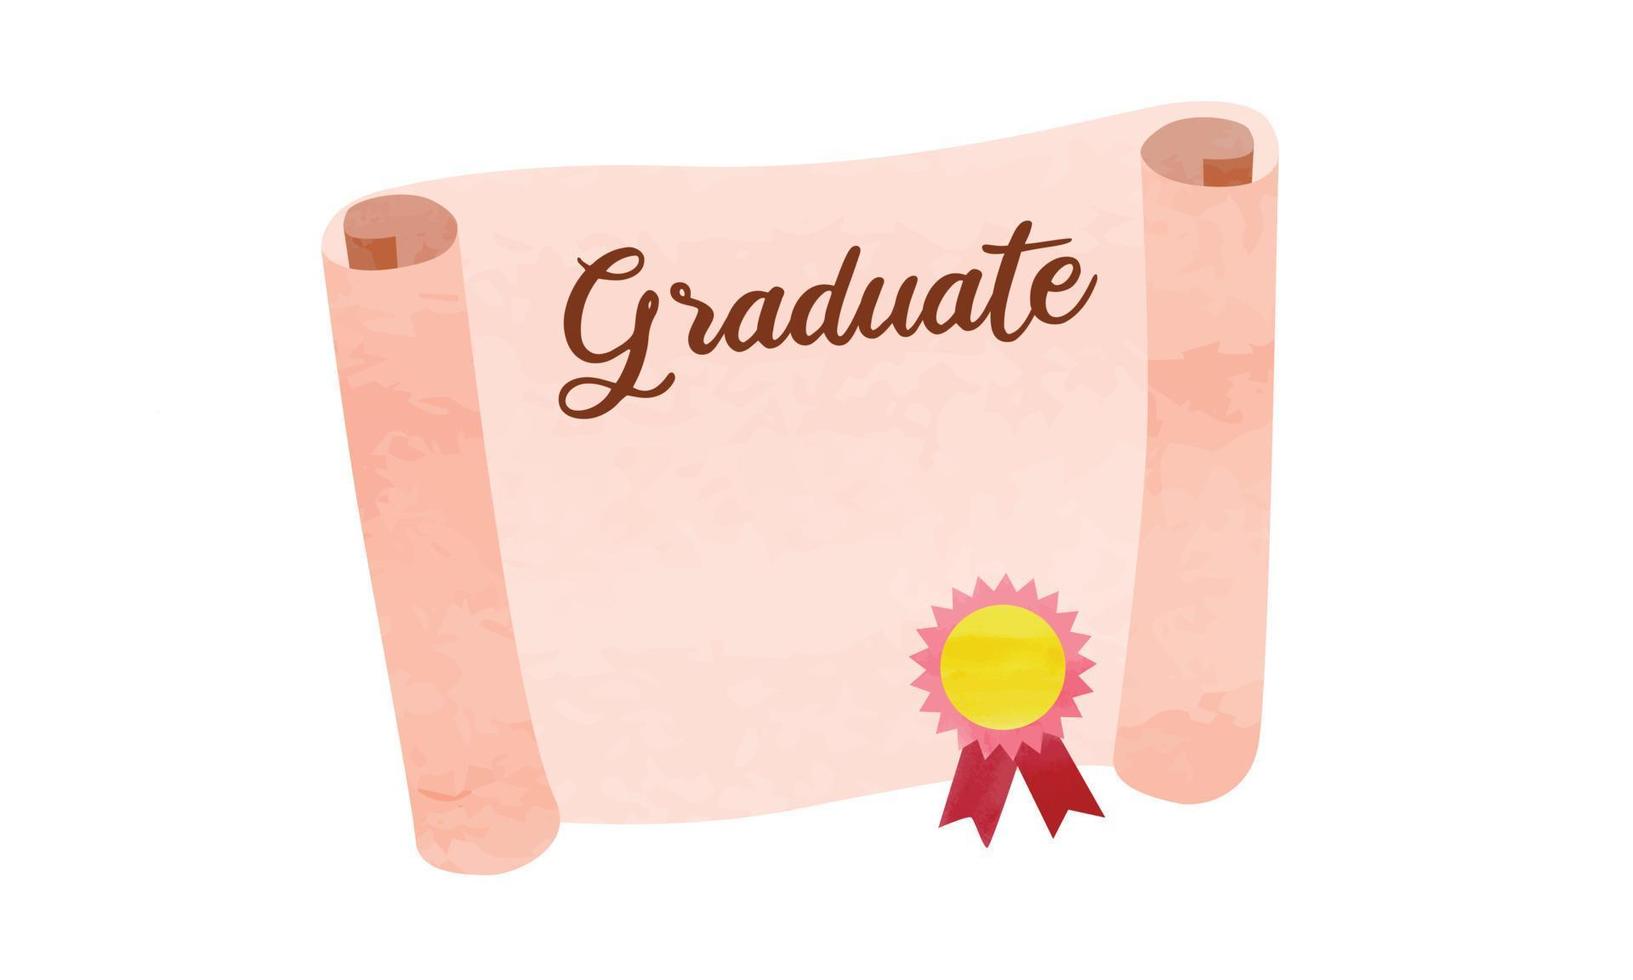 Simple opened graduation diploma with award ribbon clipart. Graduation diploma watercolor style vector illustration isolated. Horizontal graduate degree cartoon hand drawn. Graduation concept